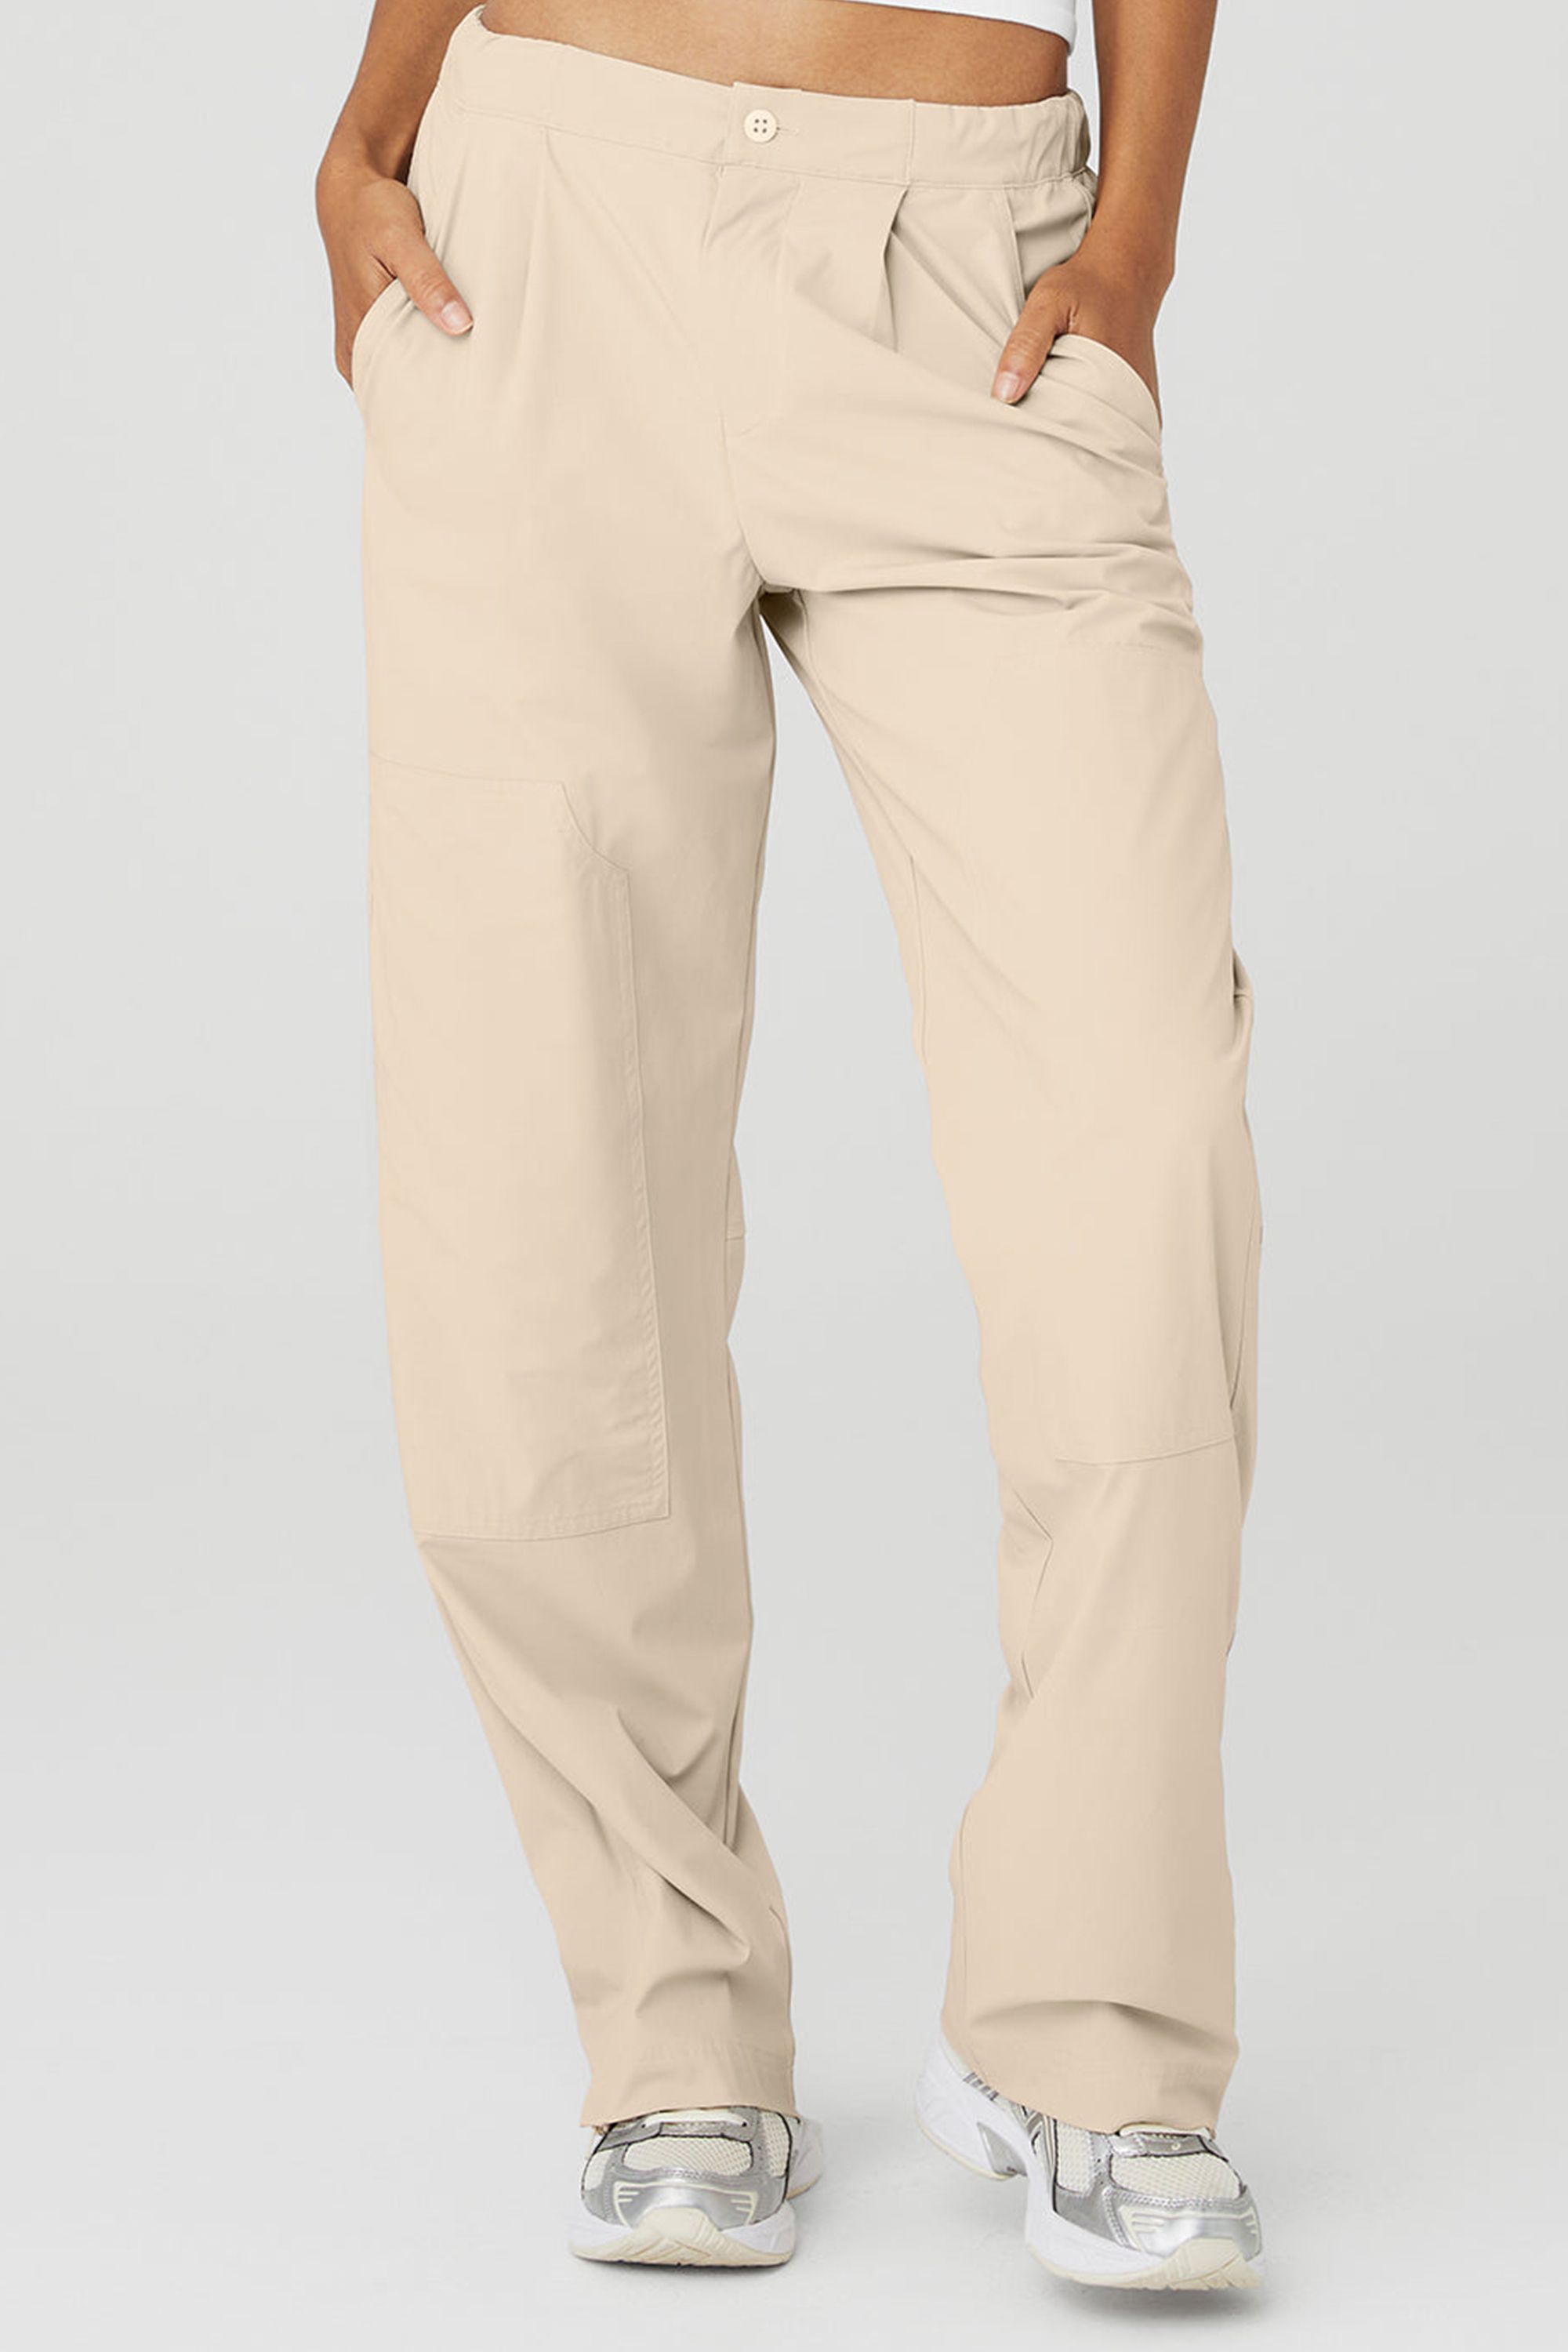 Lee Women's Side Elastic Pleated Stretch Khaki Pants - Navy, Navy, 6 -  Walmart.com